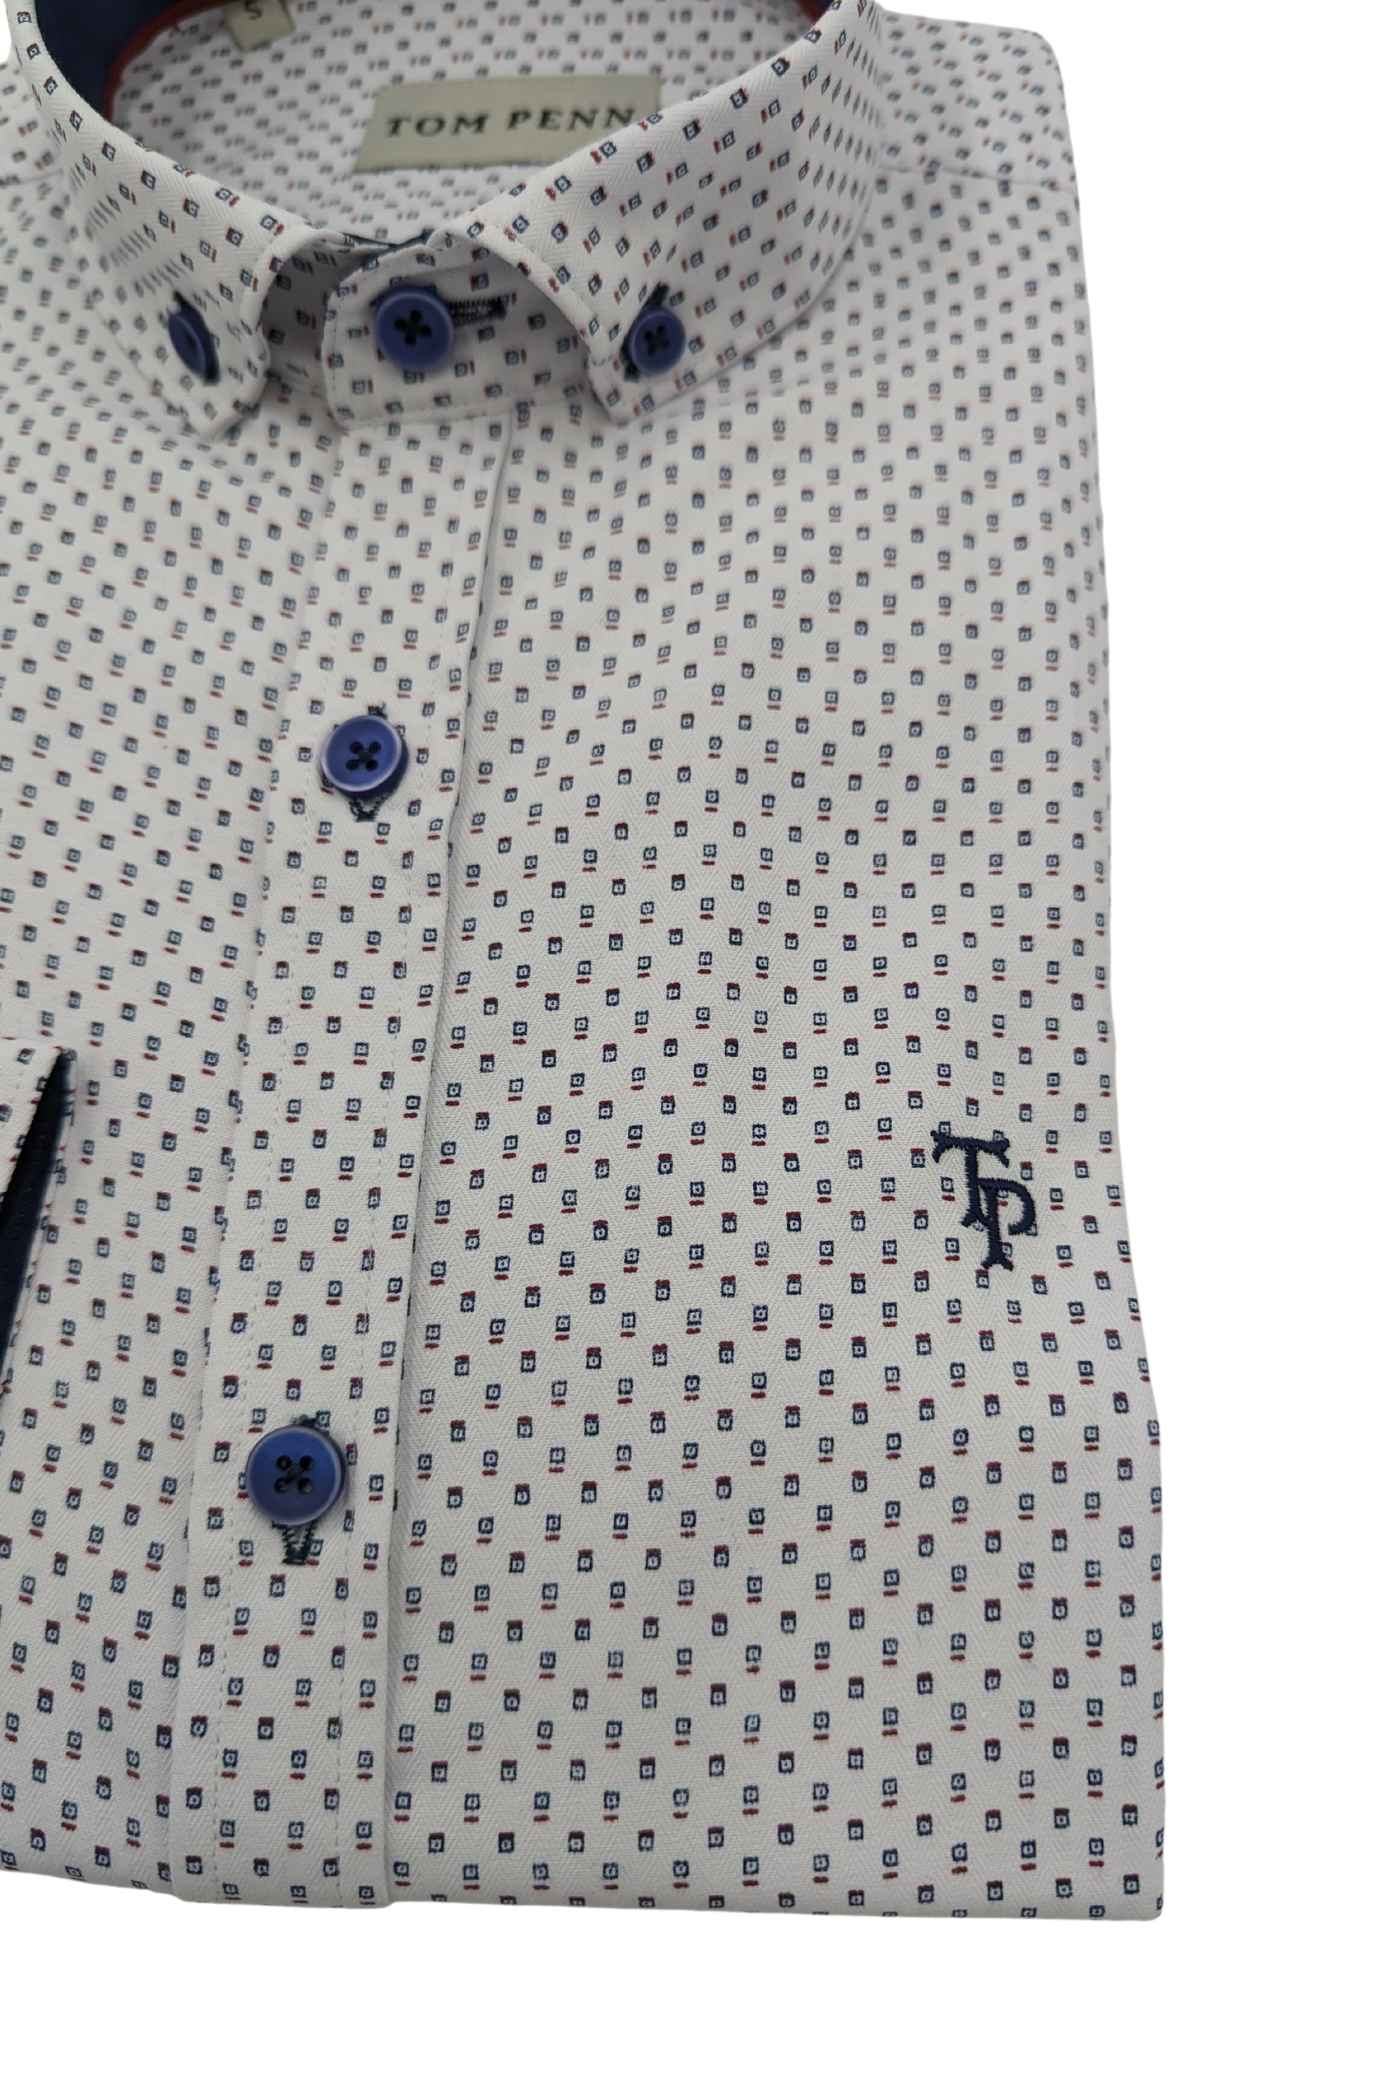 Tom Penn Long Sleeve White/navy Shirt-Detail view